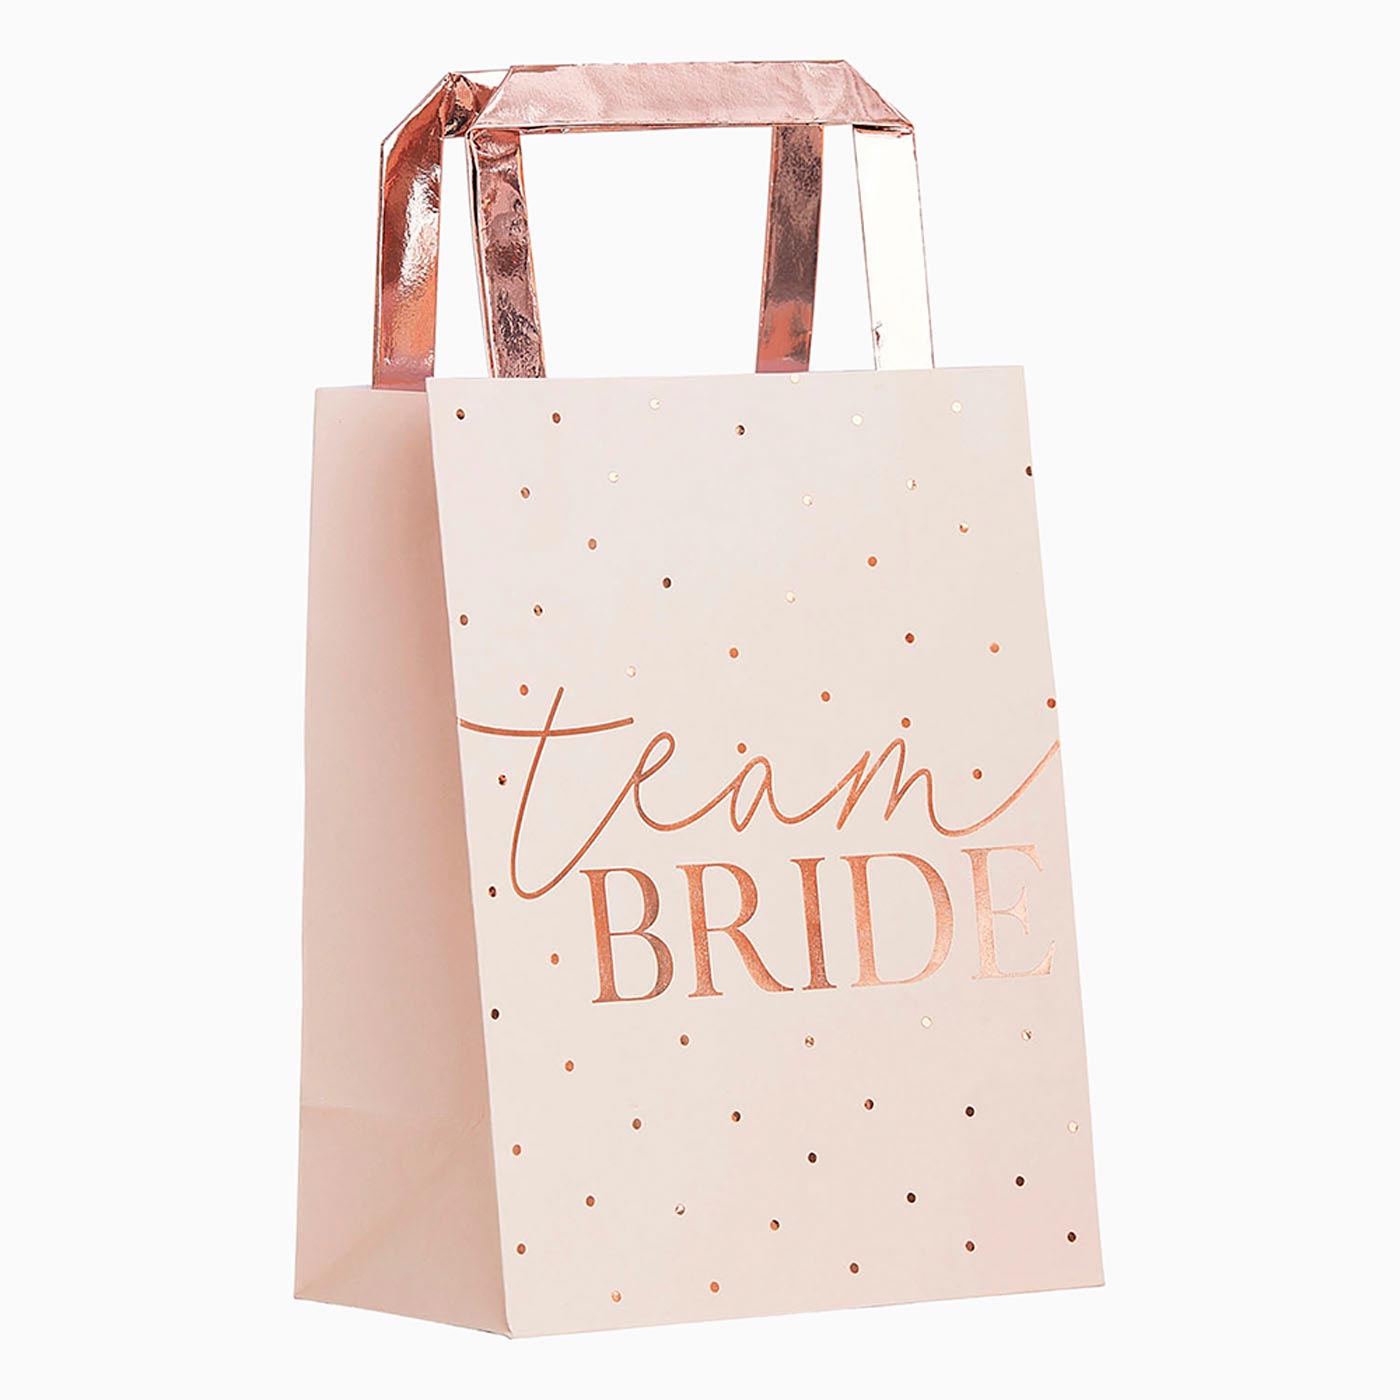 "Team Bride" gift bags